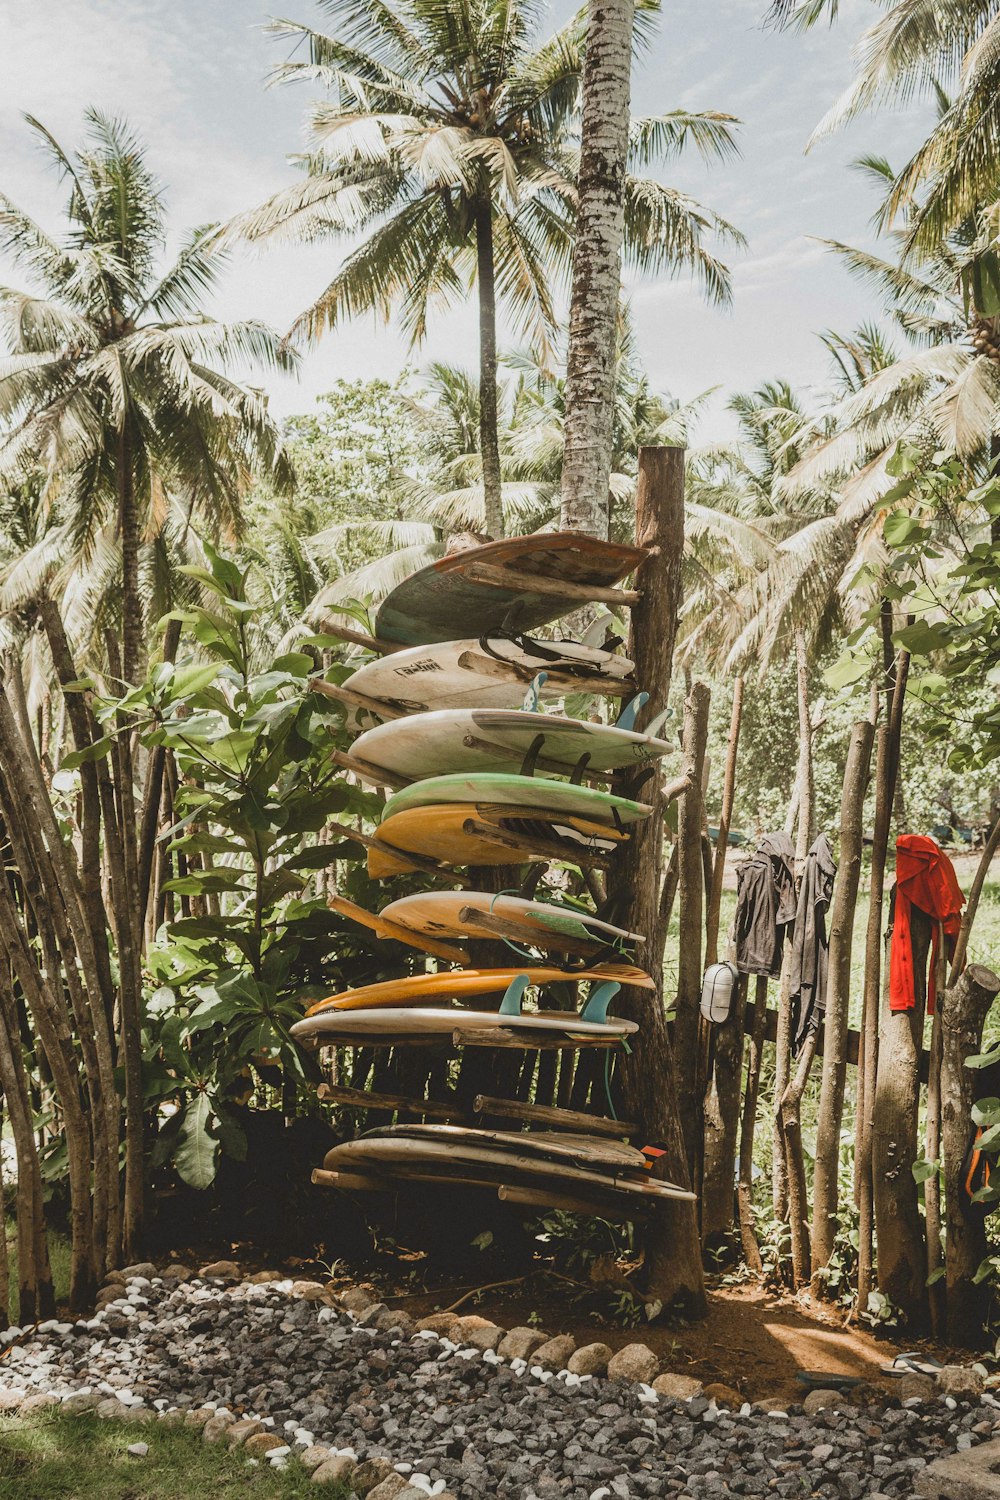 surfboards on rack